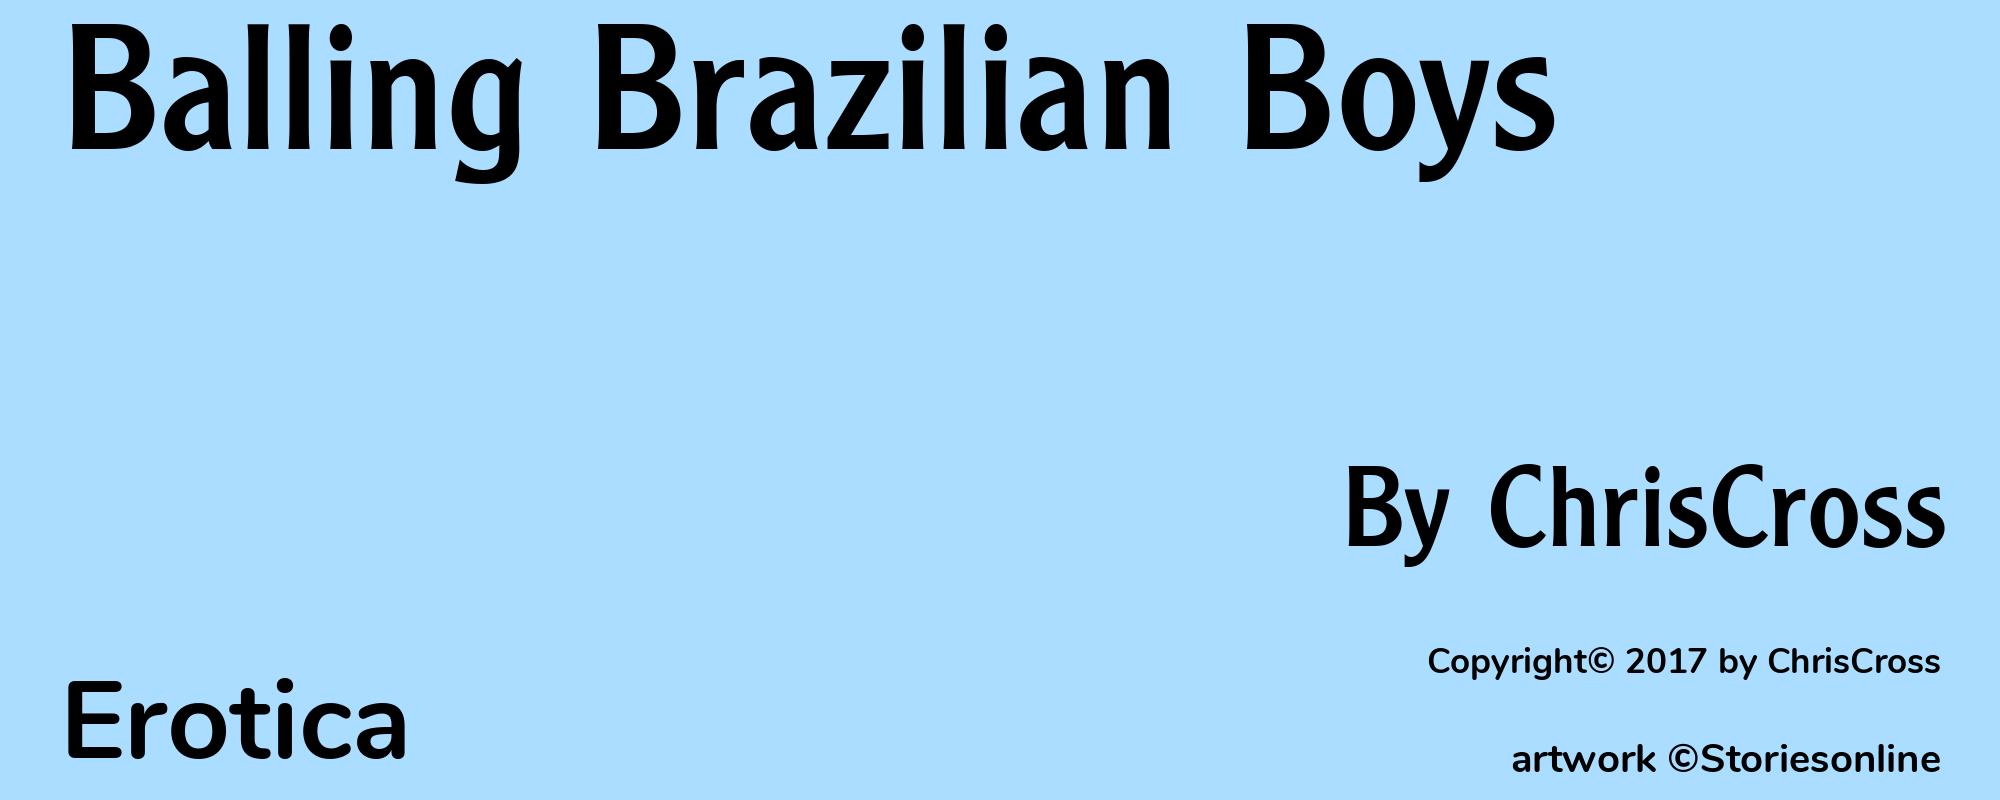 Balling Brazilian Boys - Cover